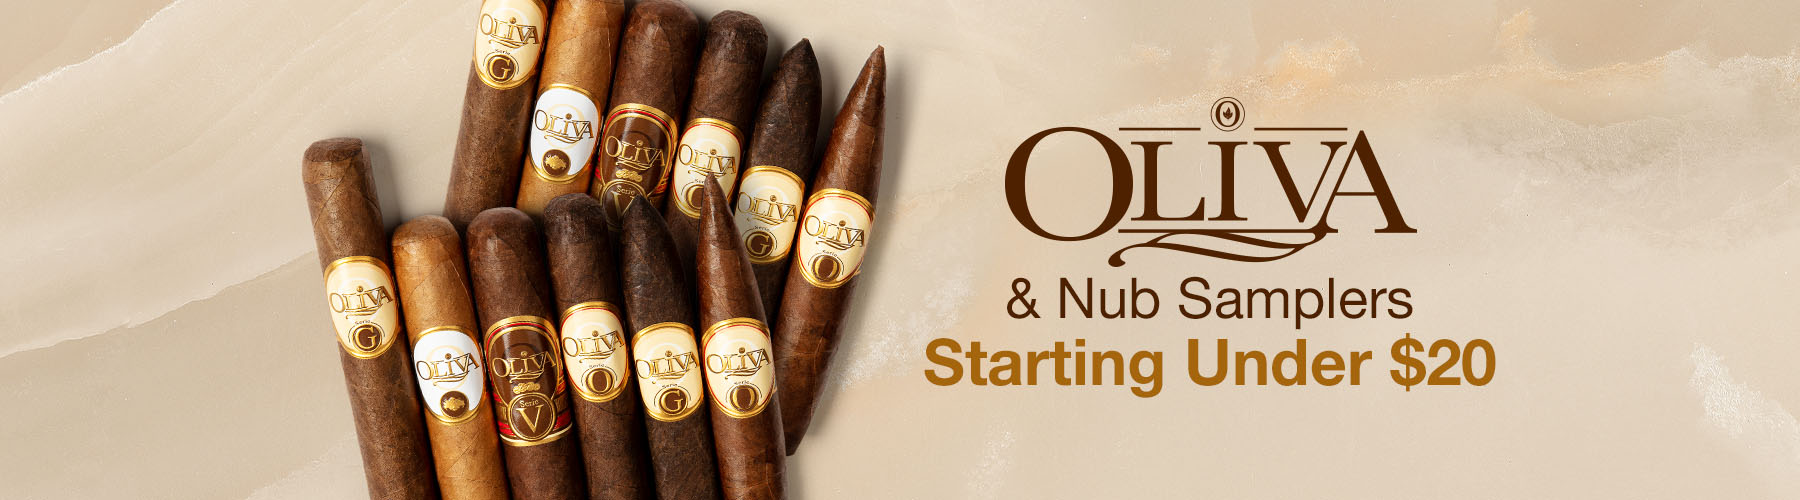 Oliva & Nub samplers starting under $20!